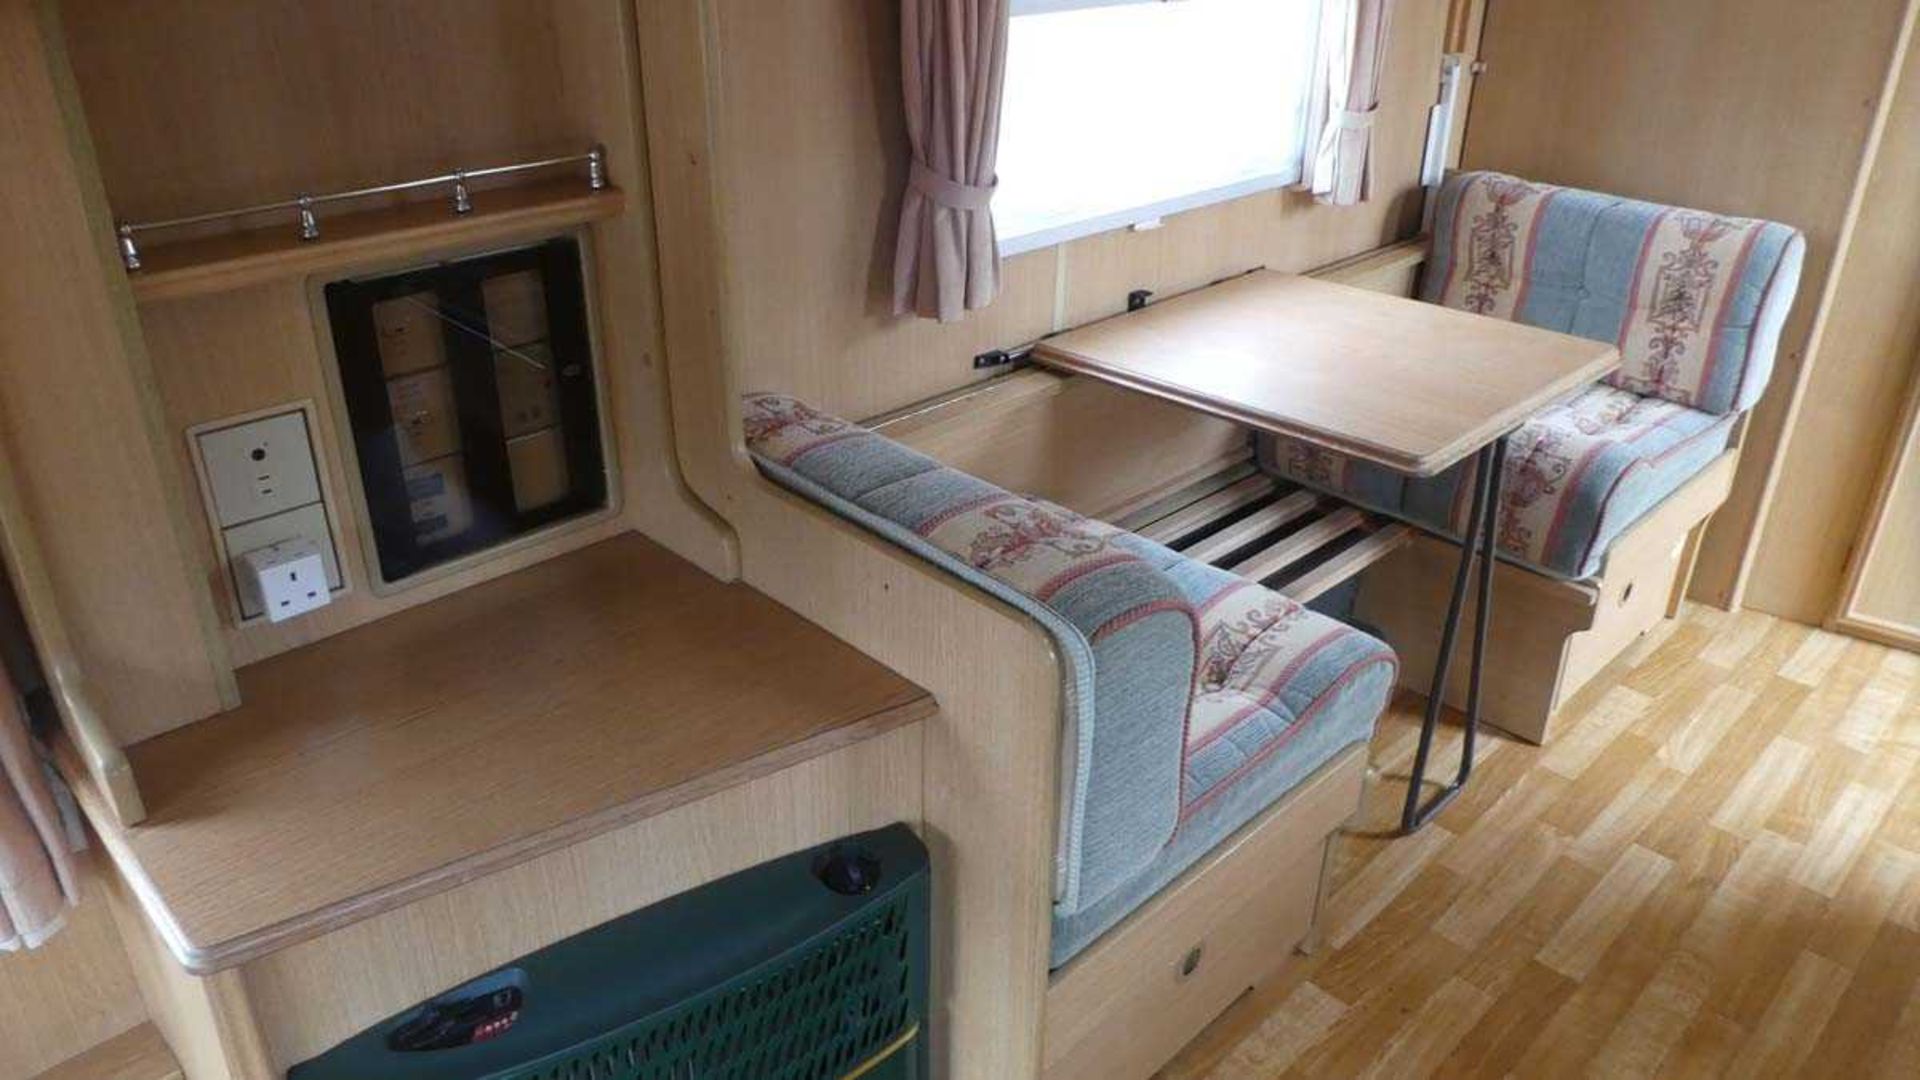 Abi Award Morningstar 18ft touring caravan, 4-5 berth with cooker, refrigerator, WC, shower, - Image 6 of 12